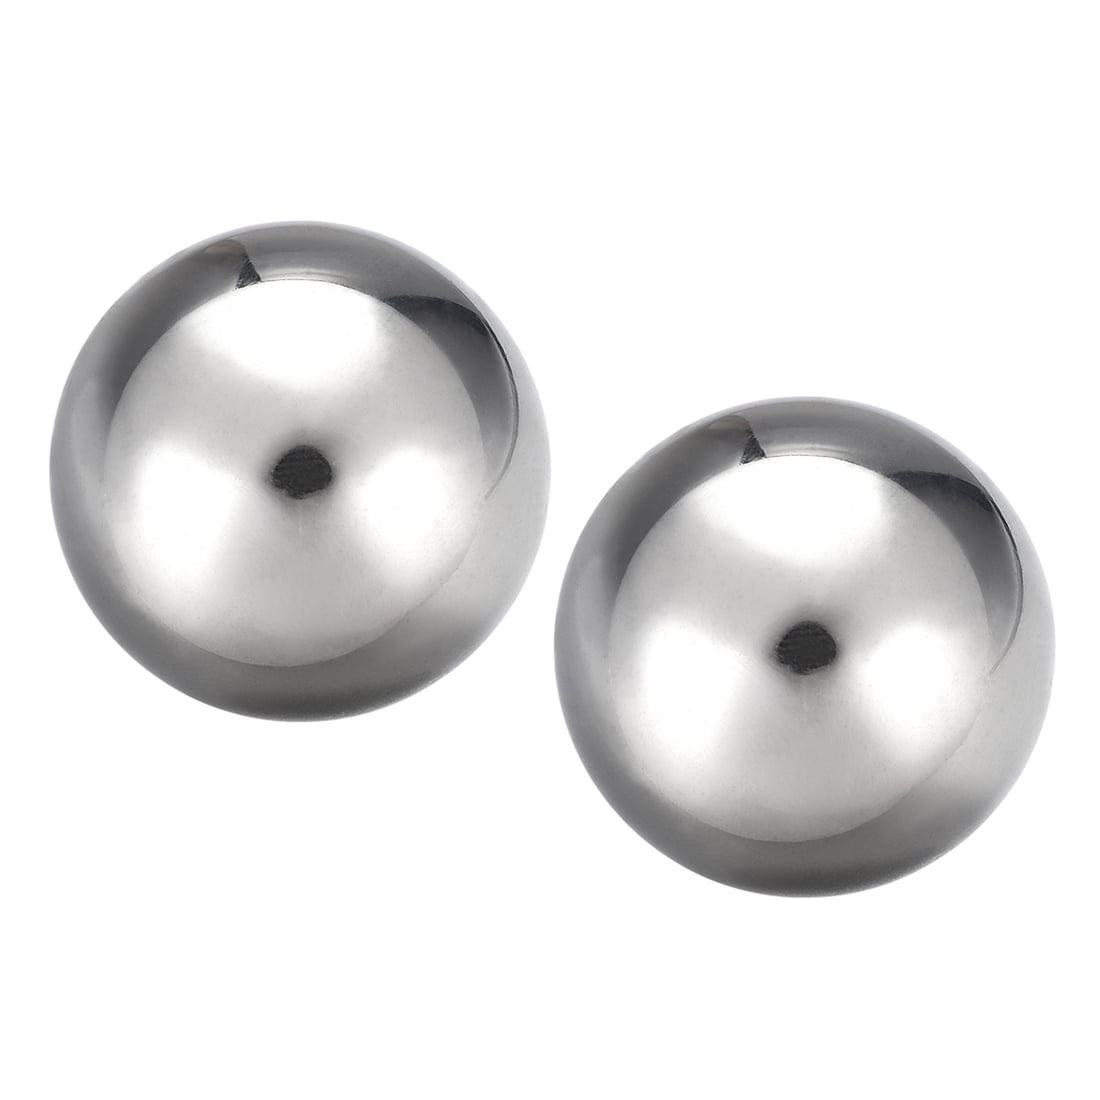 Precision Chrome Steel Bearing Balls 30mm G10 2pcs 